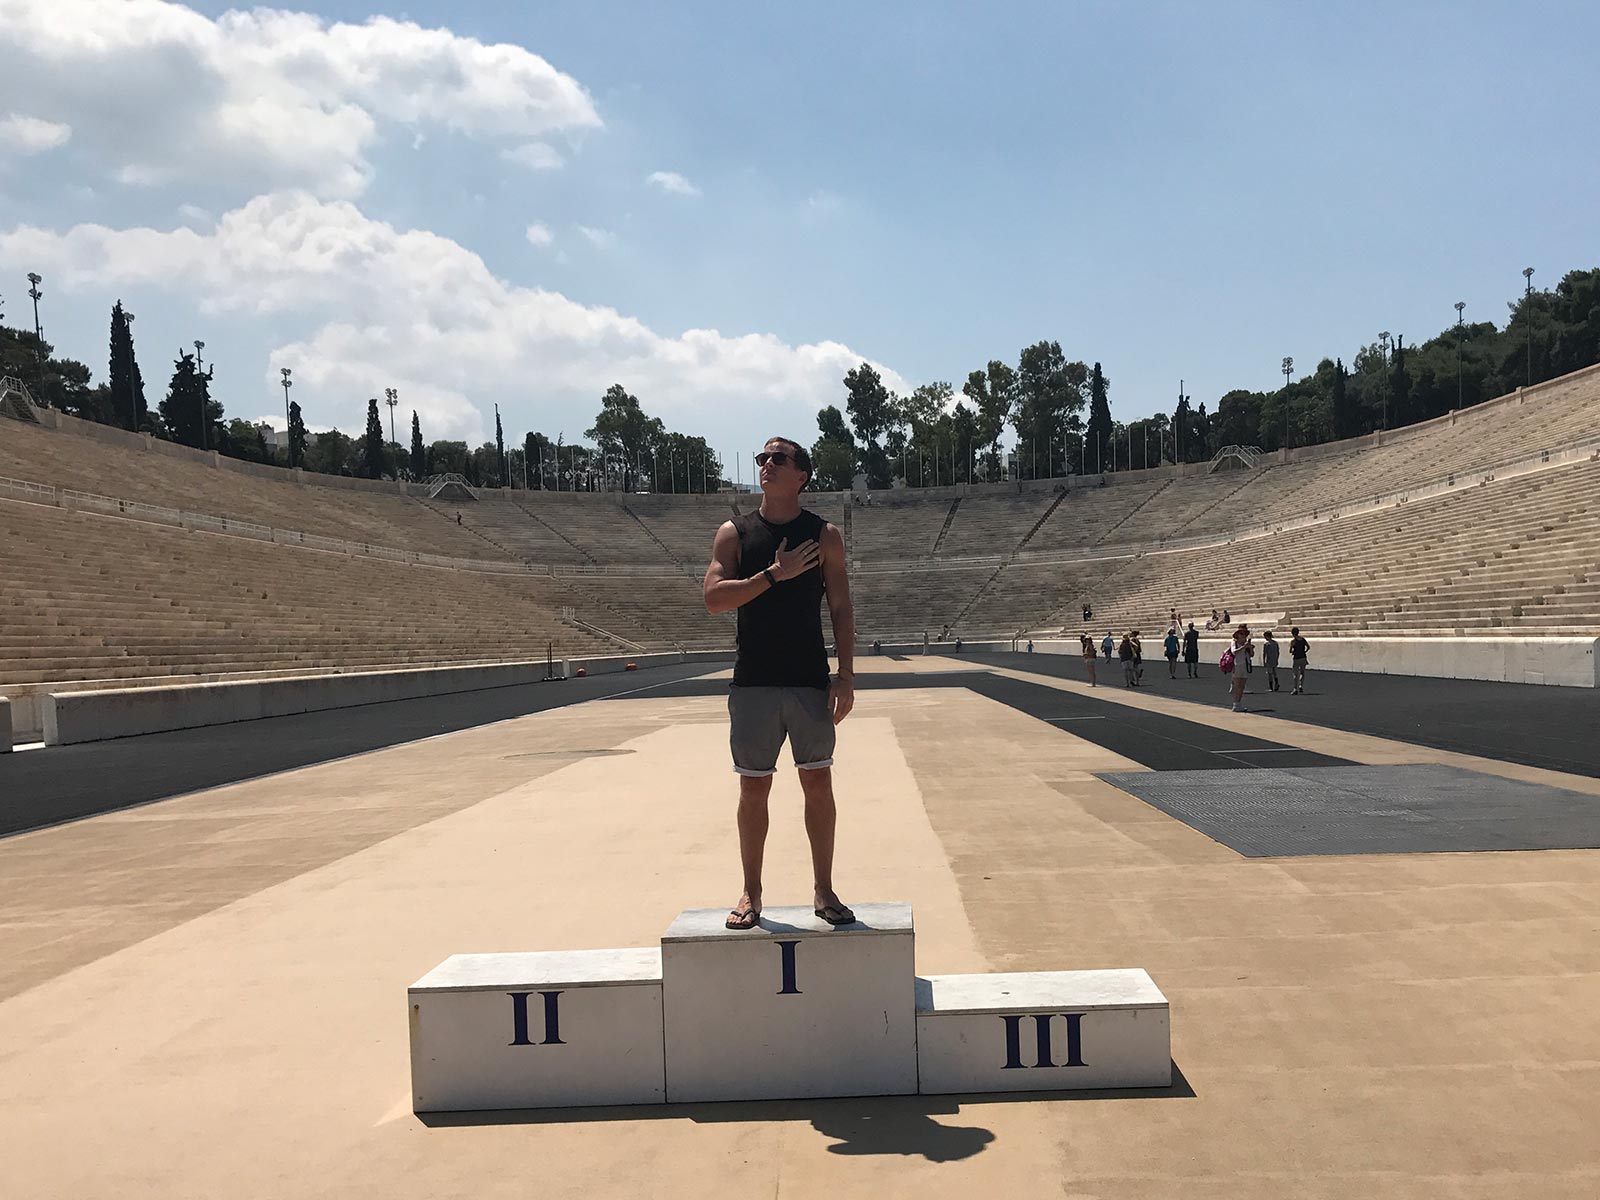 David Simpson at Panathenaic Stadium in Athens, Greece. Athens has me